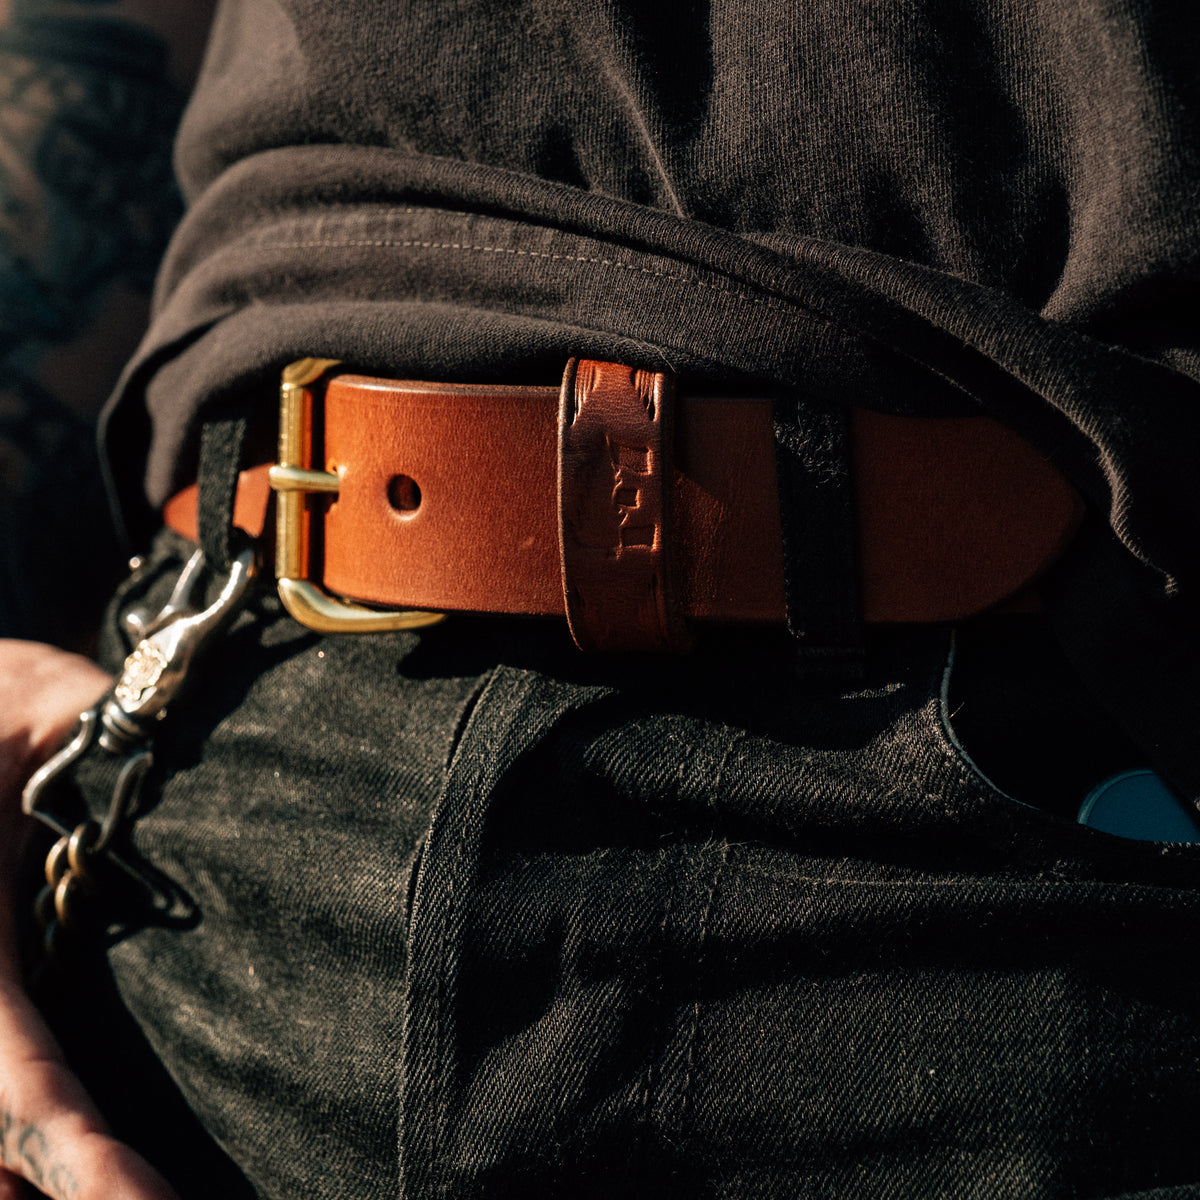 VANS Brown Belts for Men